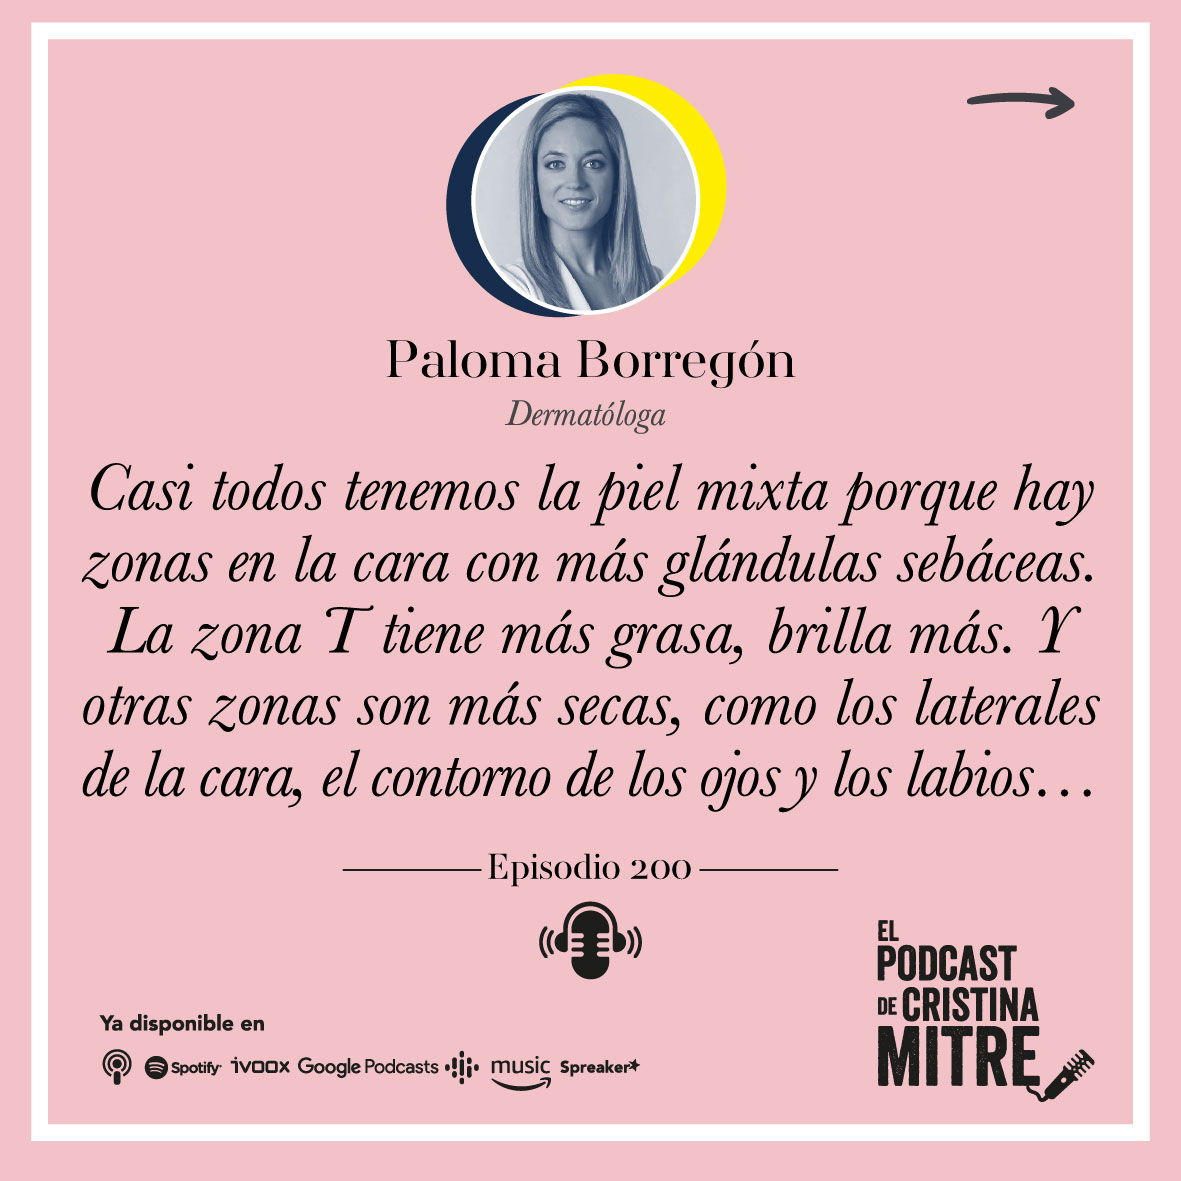 Podcast Cristina Mitre Paloma Borregon rutina cosmetica